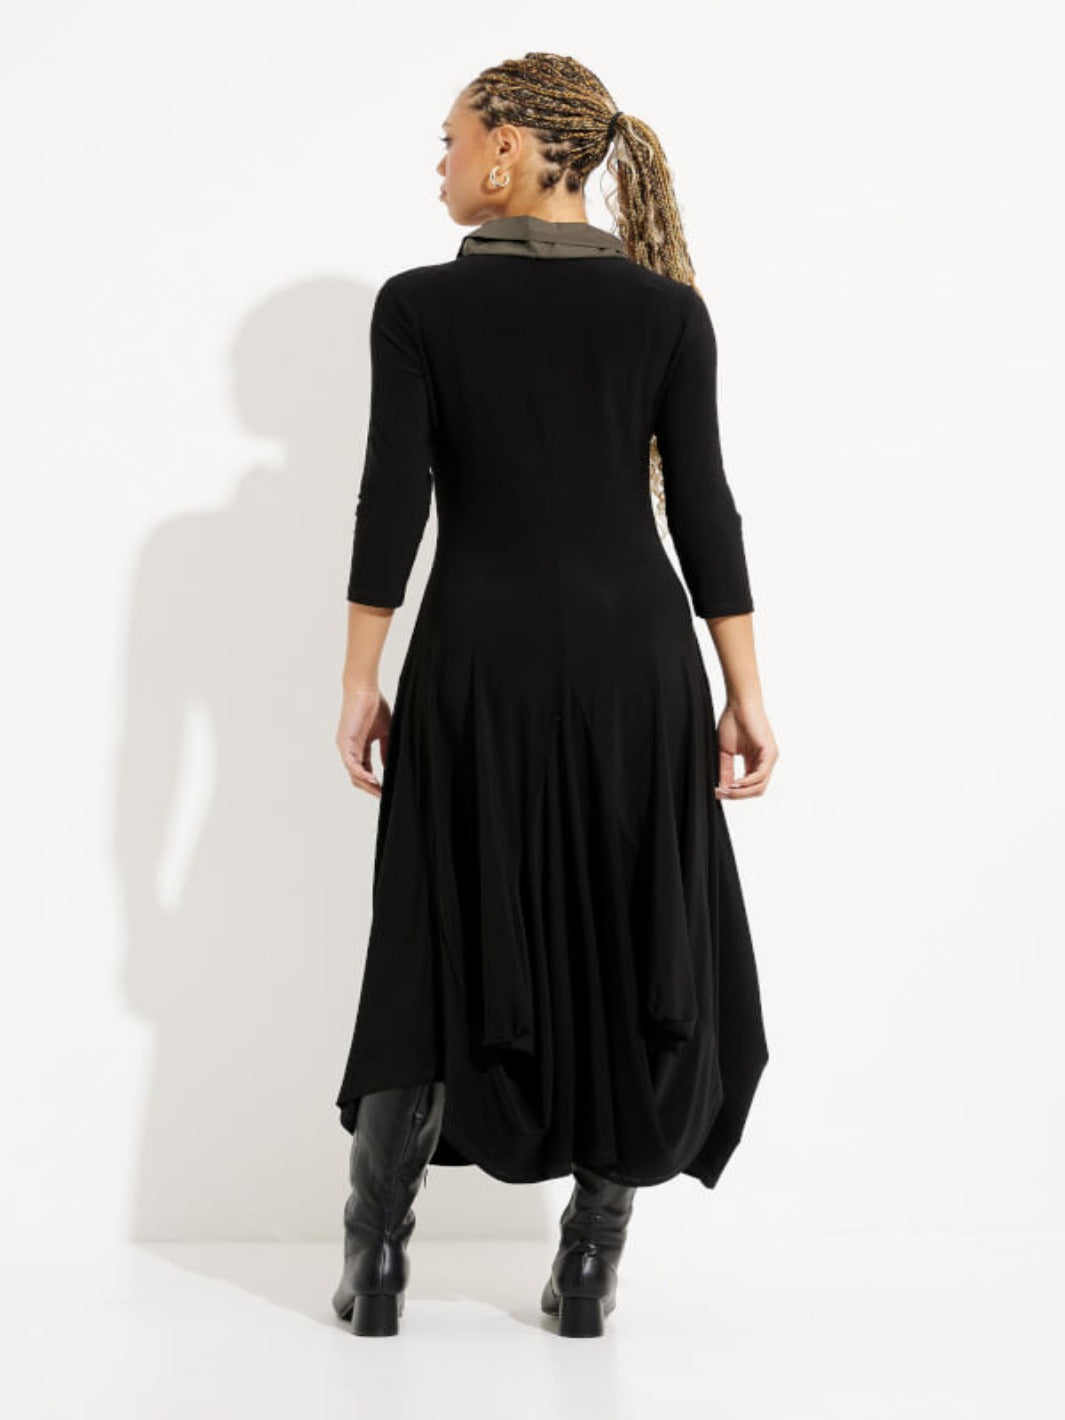 Joseph Ribkoff - Pocket Detail Dress in Khaki/Black 233110-Nicola Ross